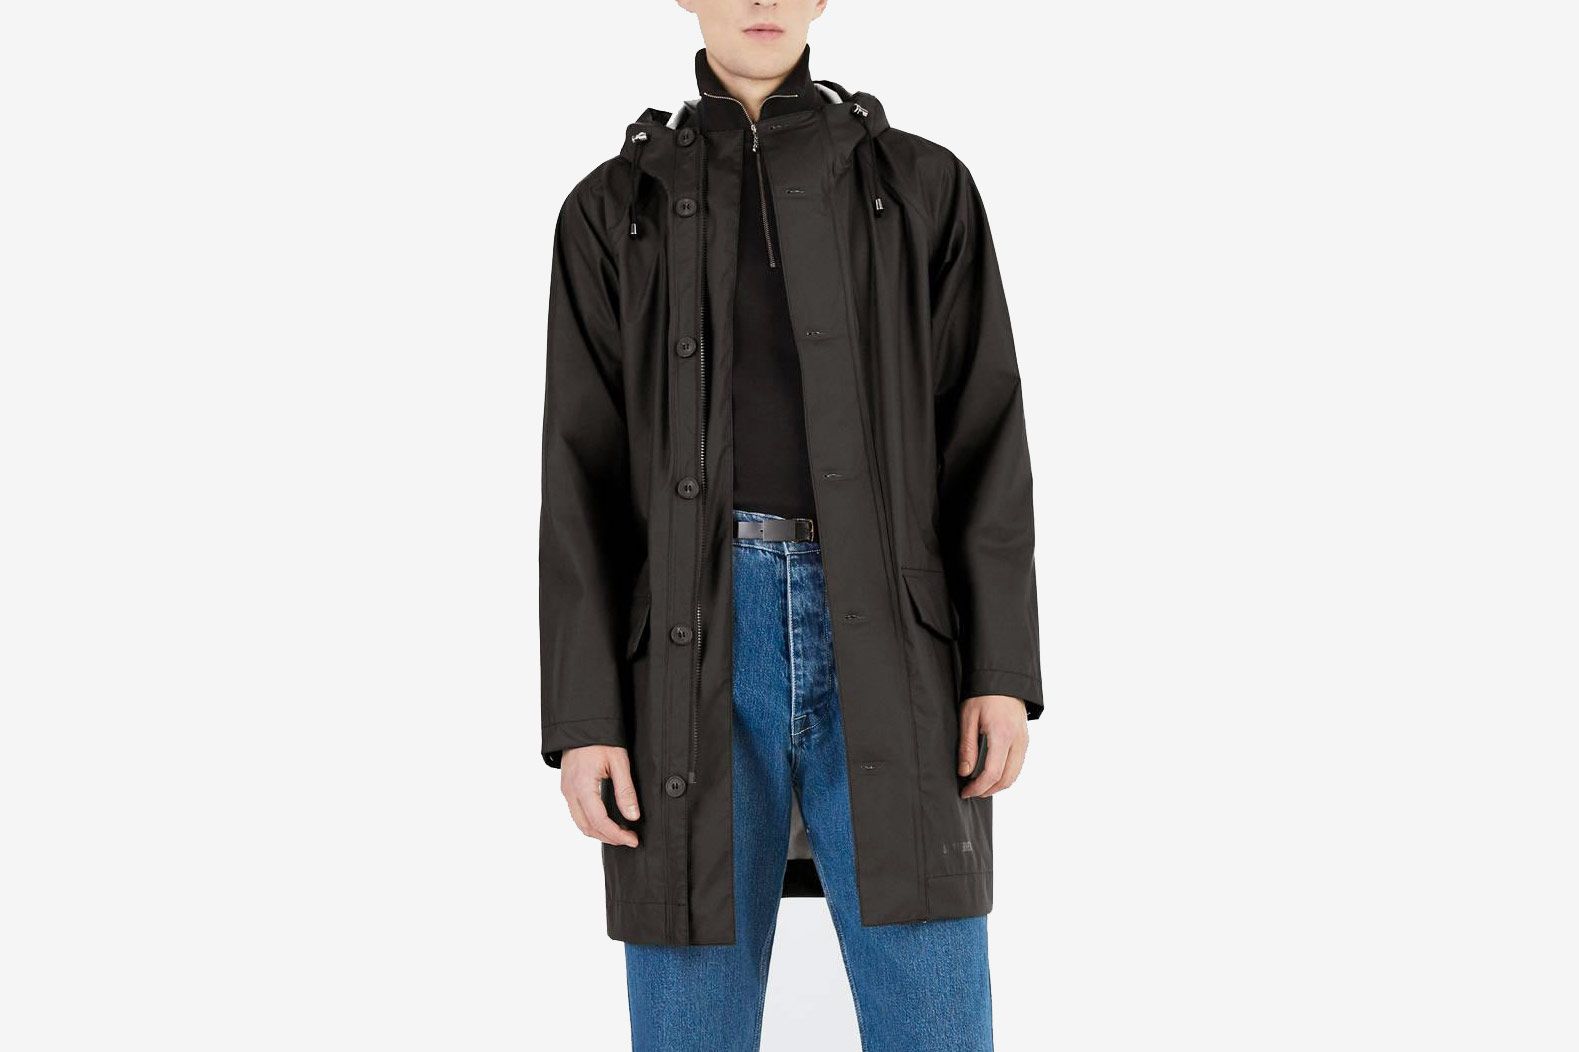 Waterproof Lined Rain Coat Jacket Padded Warm Outdoors Work Mens S521 